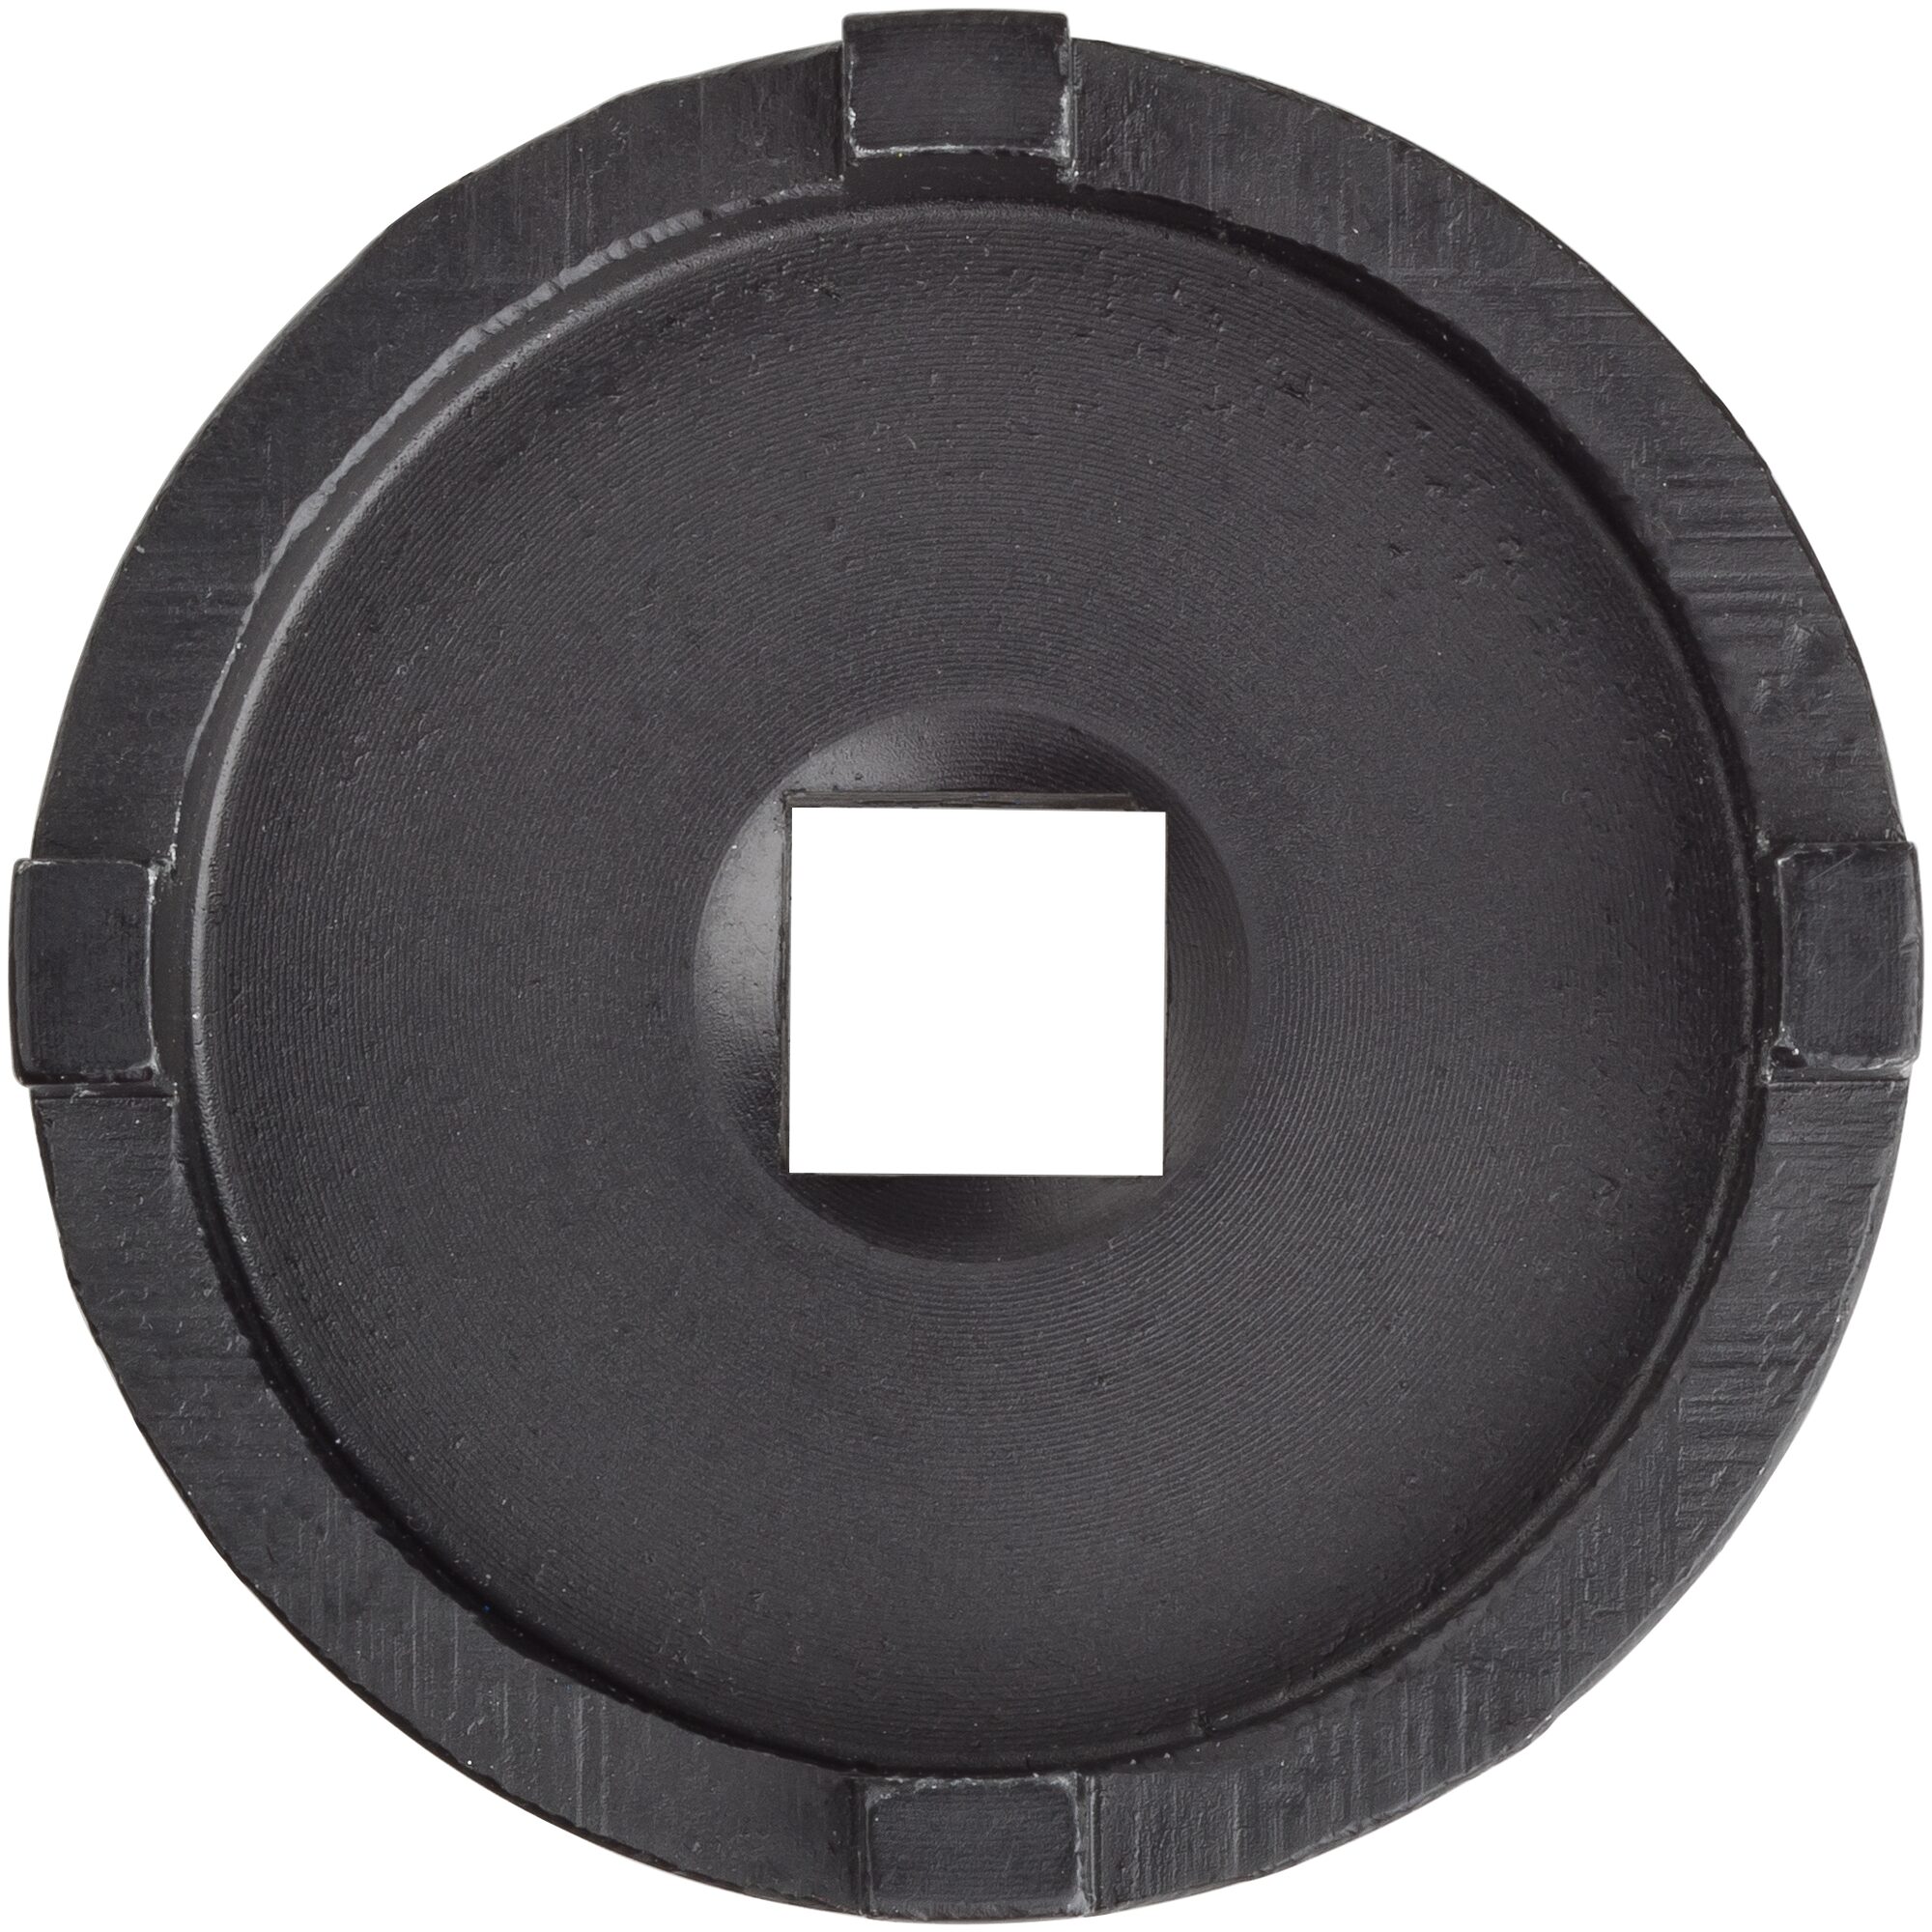 HAZET Traggelenk-Zapfenschlüssel 2737-1 · Vierkant hohl 12,5 mm (1/2 Zoll) · Zapfenprofil massiv